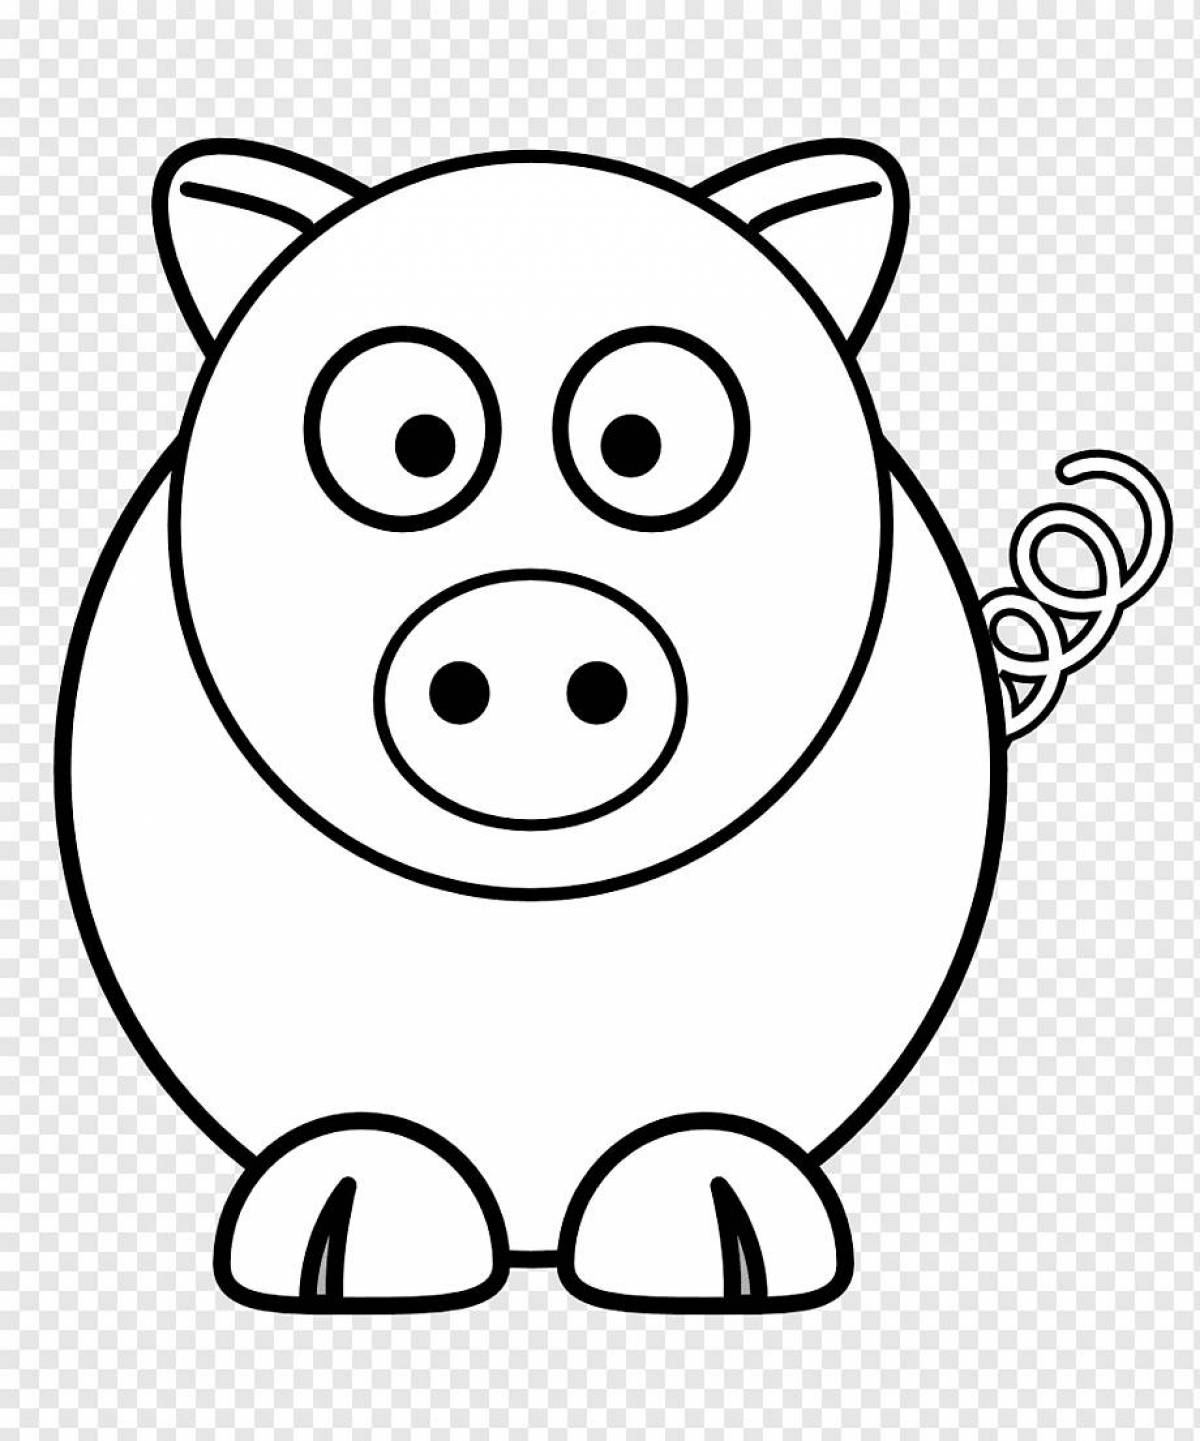 Playful pig coloring